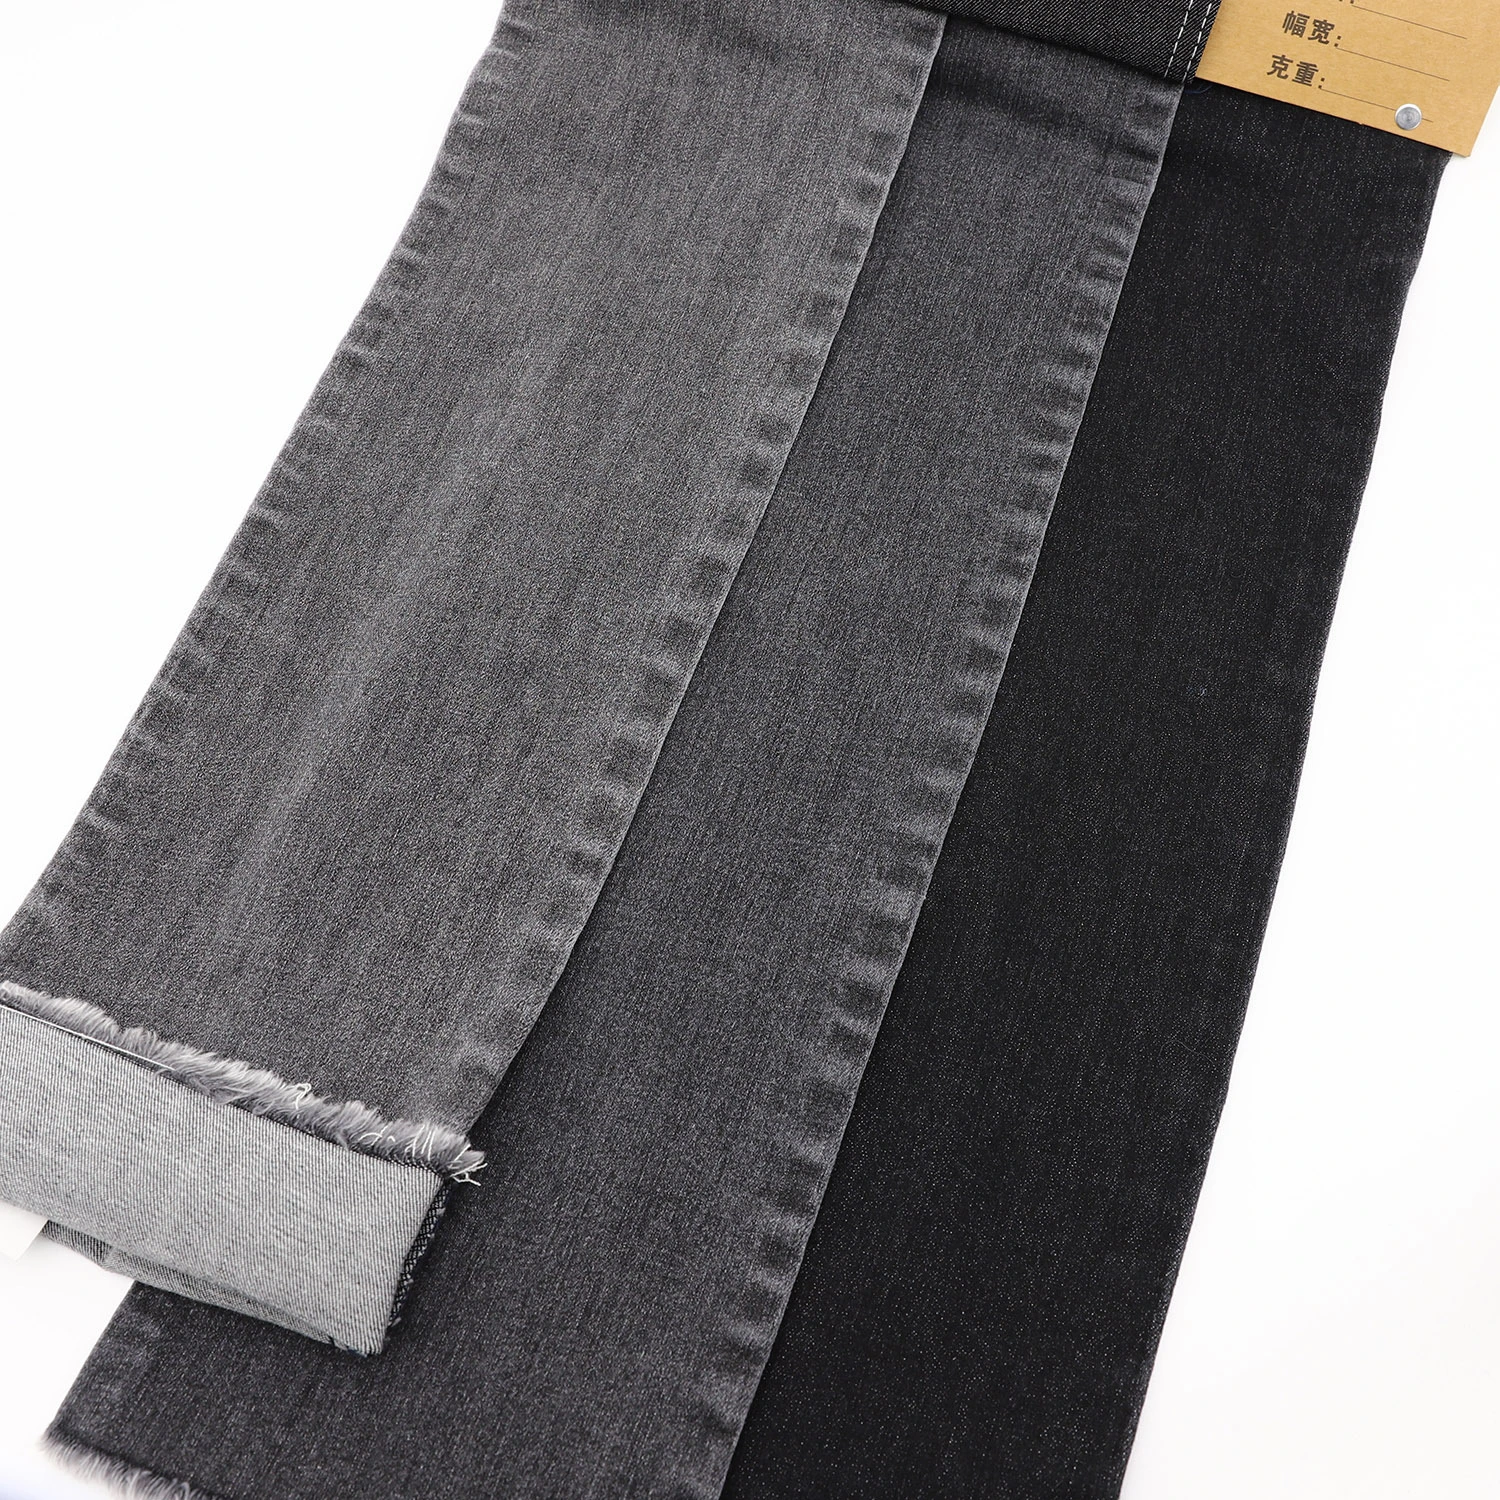 3283 denim fabric stretchable 9.5oz with spandex and slub 4